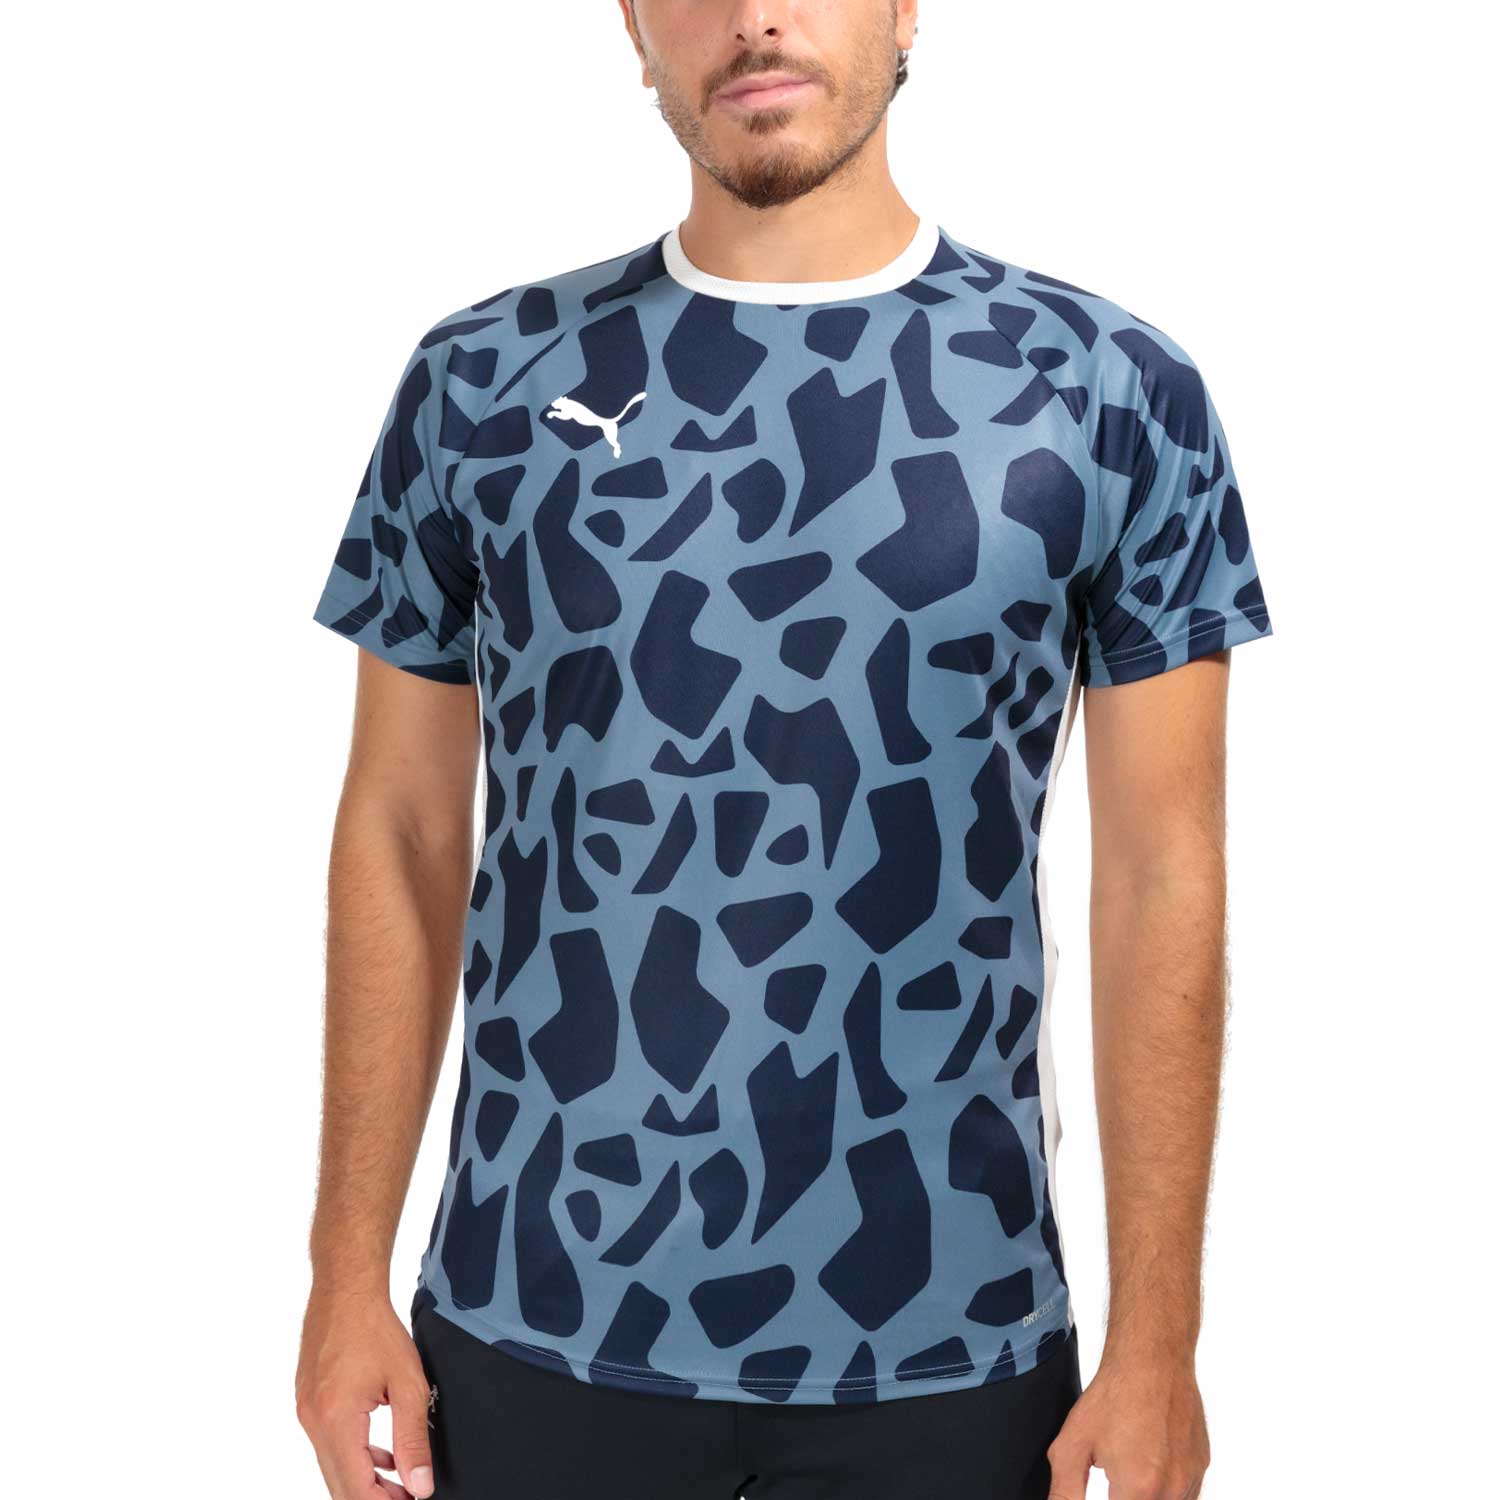 Puma Teamliga Graphic T-Shirt - Navy/China Blue